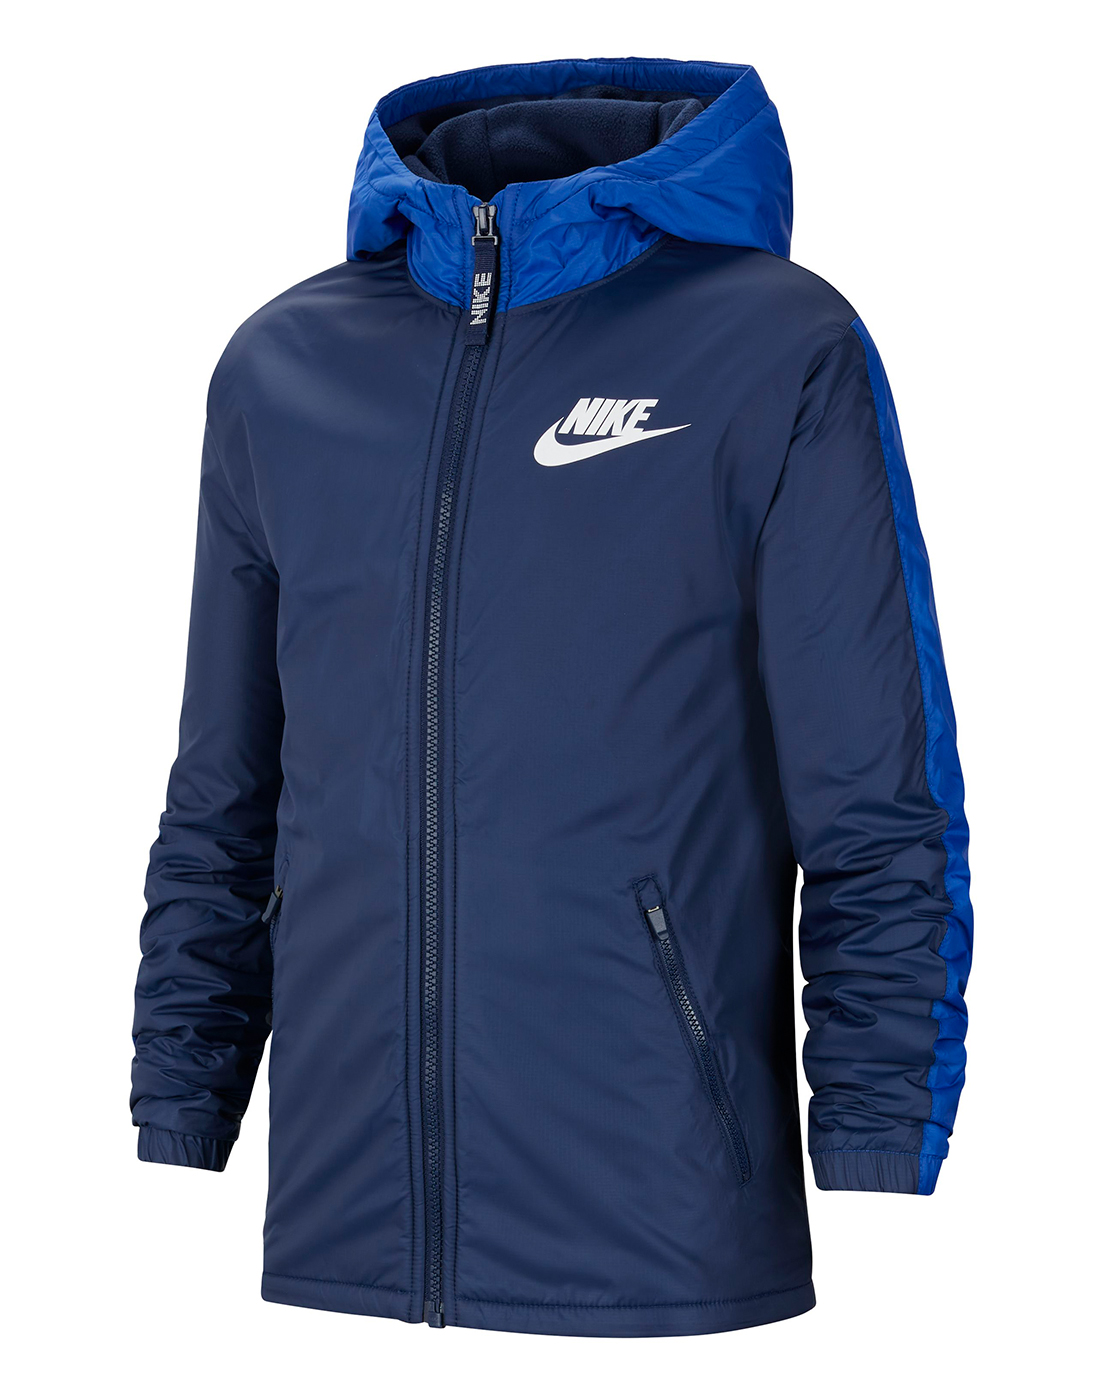 Nike Older Boys Fleece Lined Jacket - Navy | Life Style Sports IE